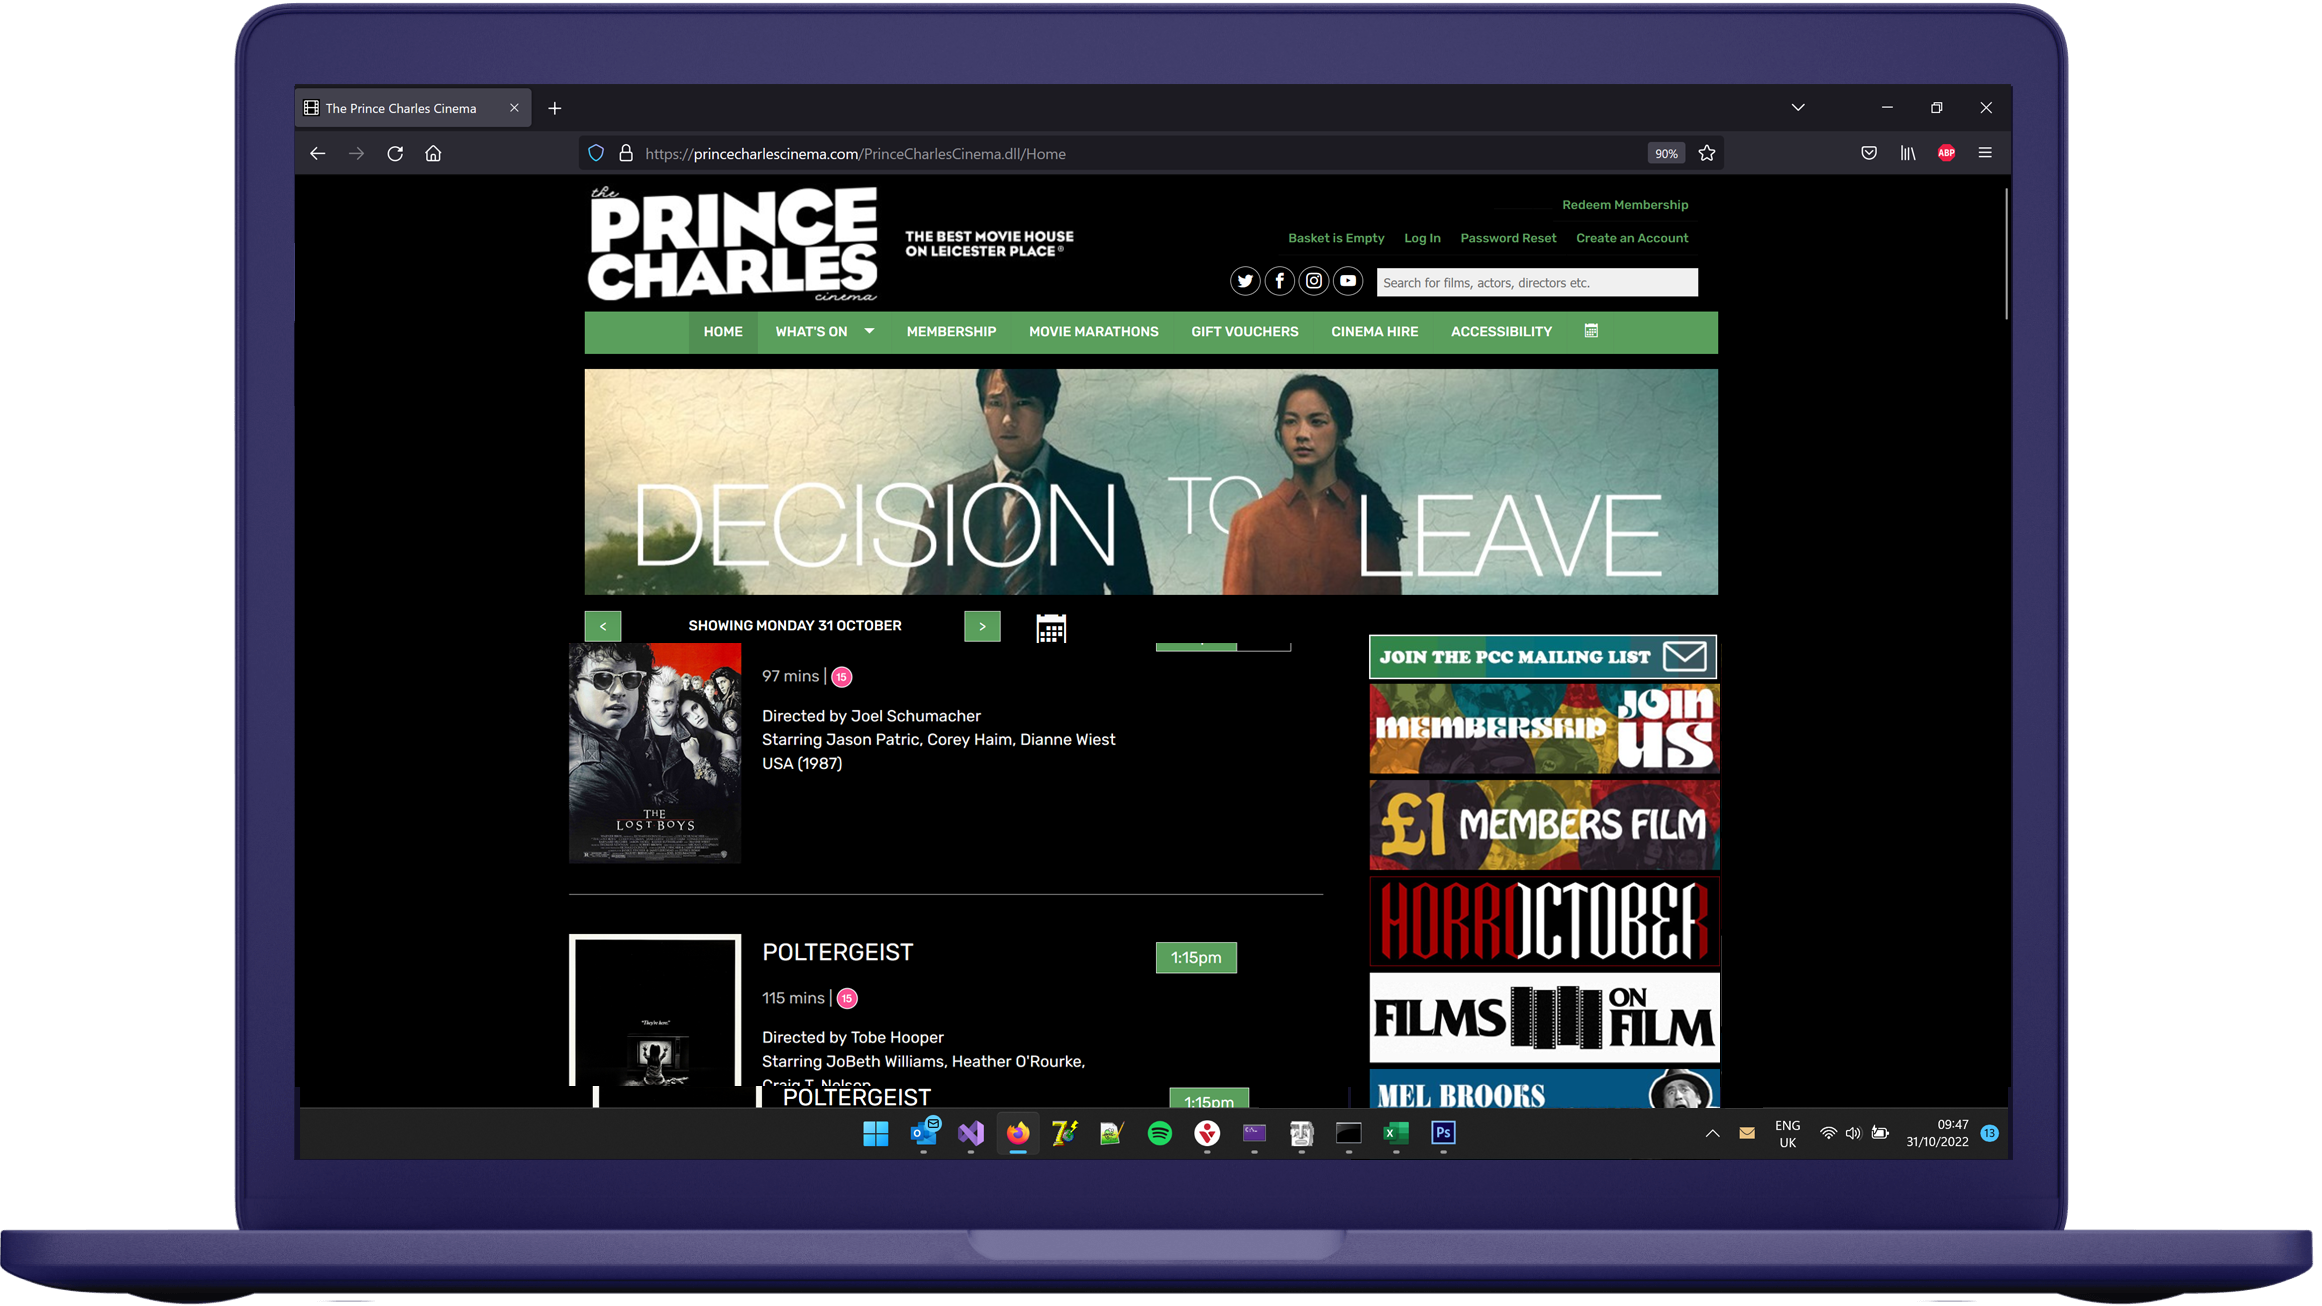 A cinema website displayed on a laptop computer